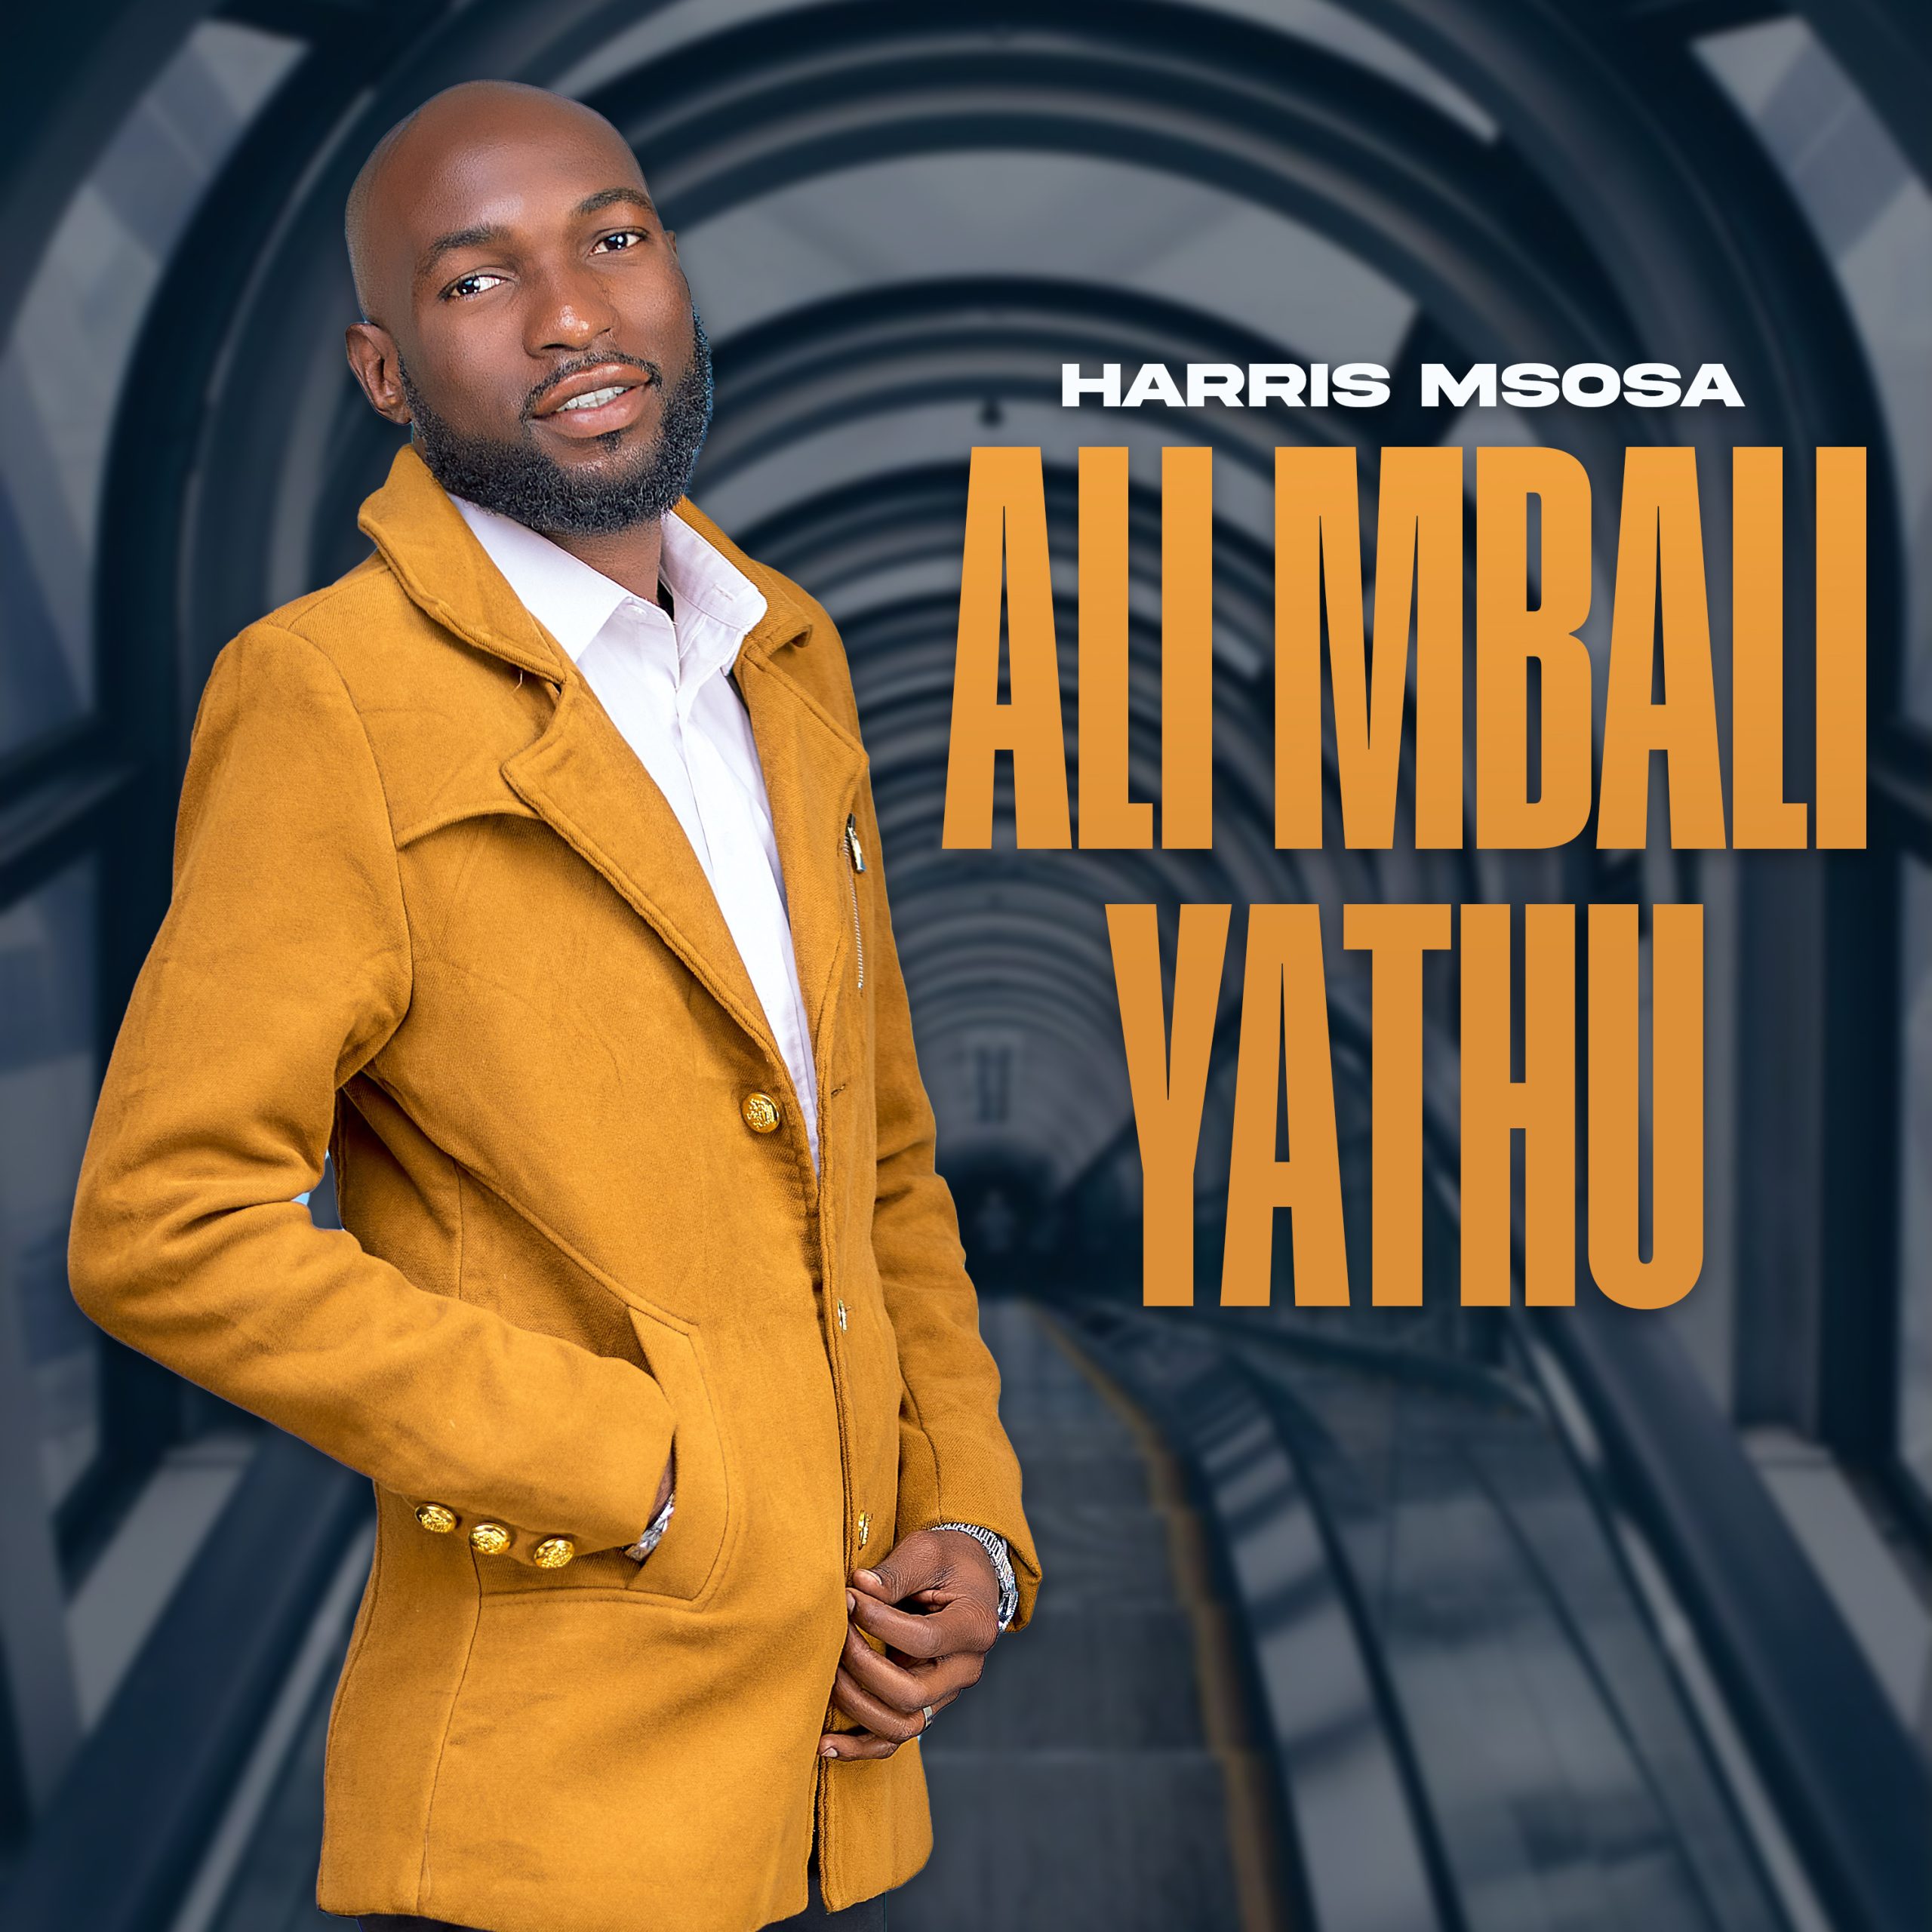 Harris Msosa – Ali Mbali Yathu